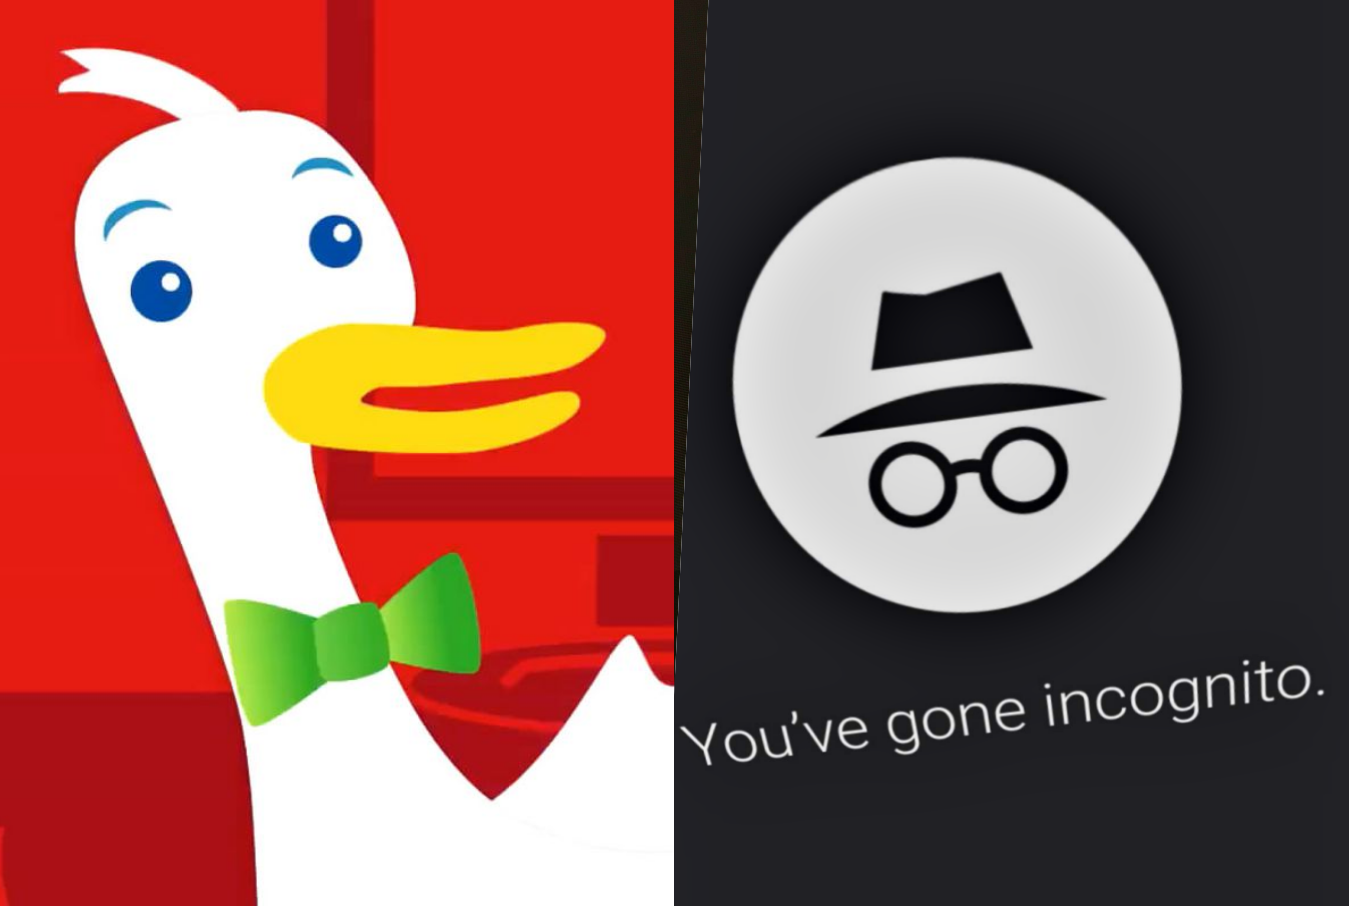 Is DuckDuckGo incognito?